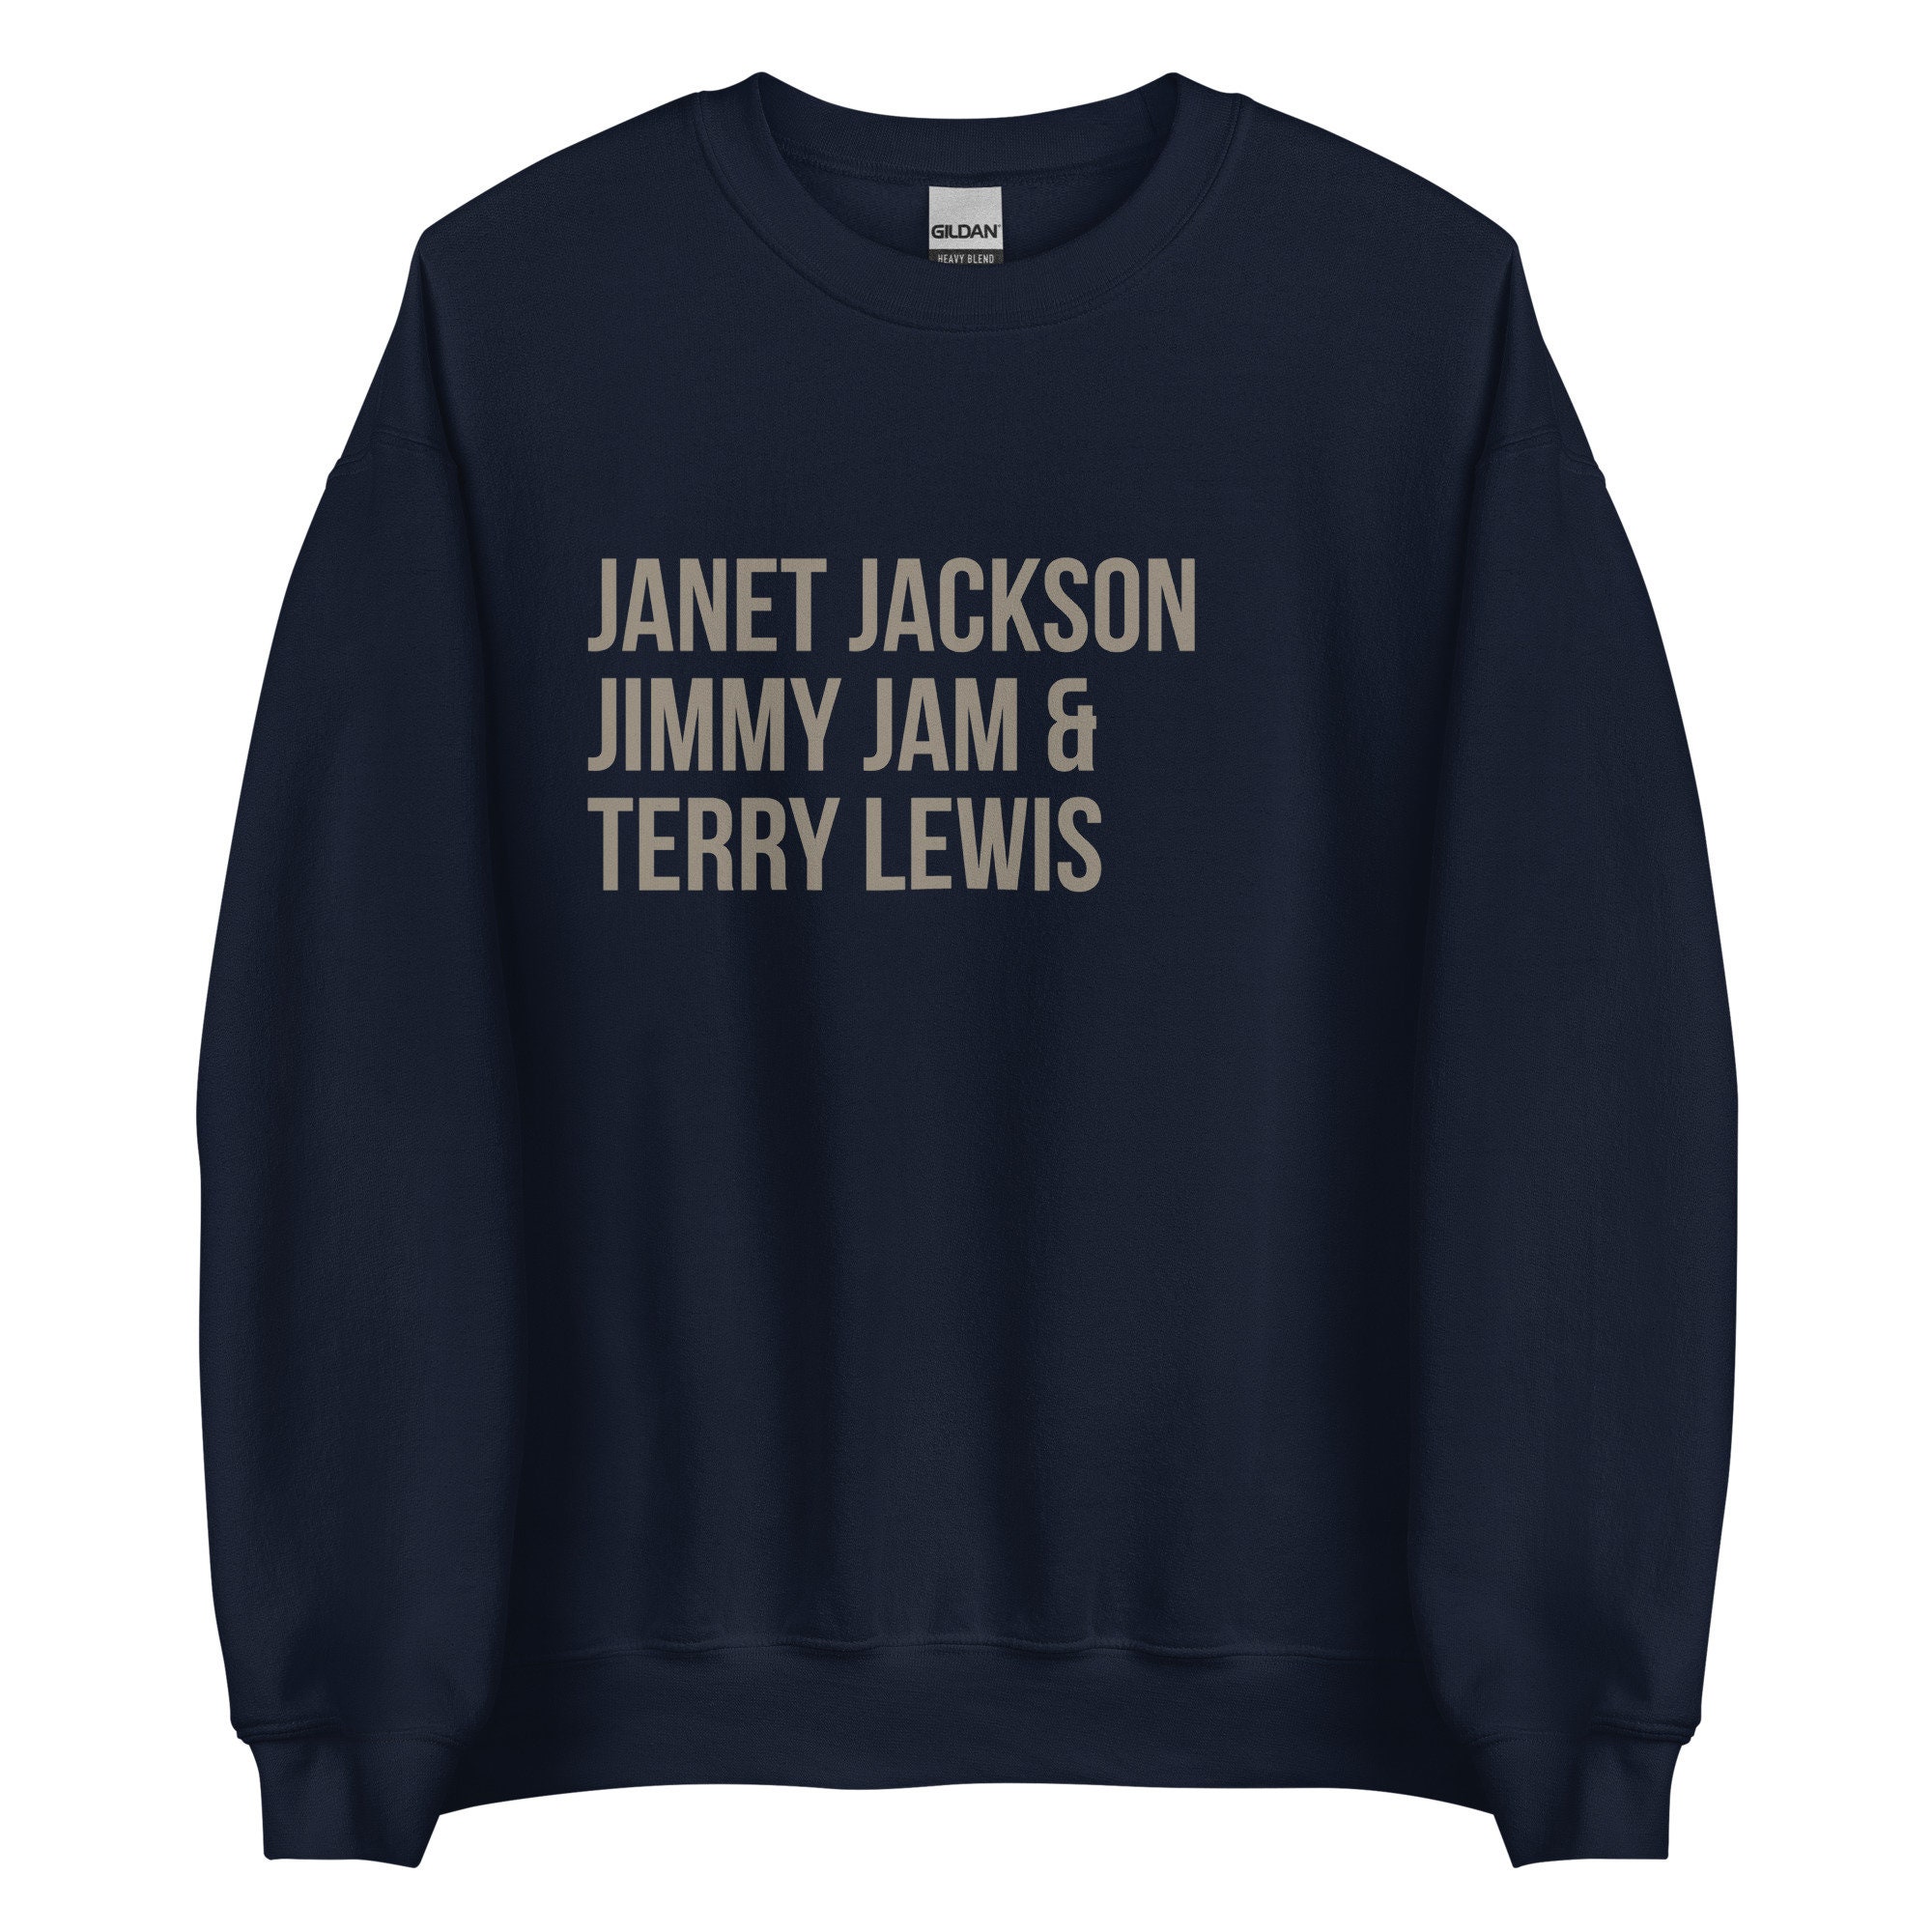 Janet Jackson / Jimmy Jam / Terry Lewis / Janet Jackson Sweatshirt